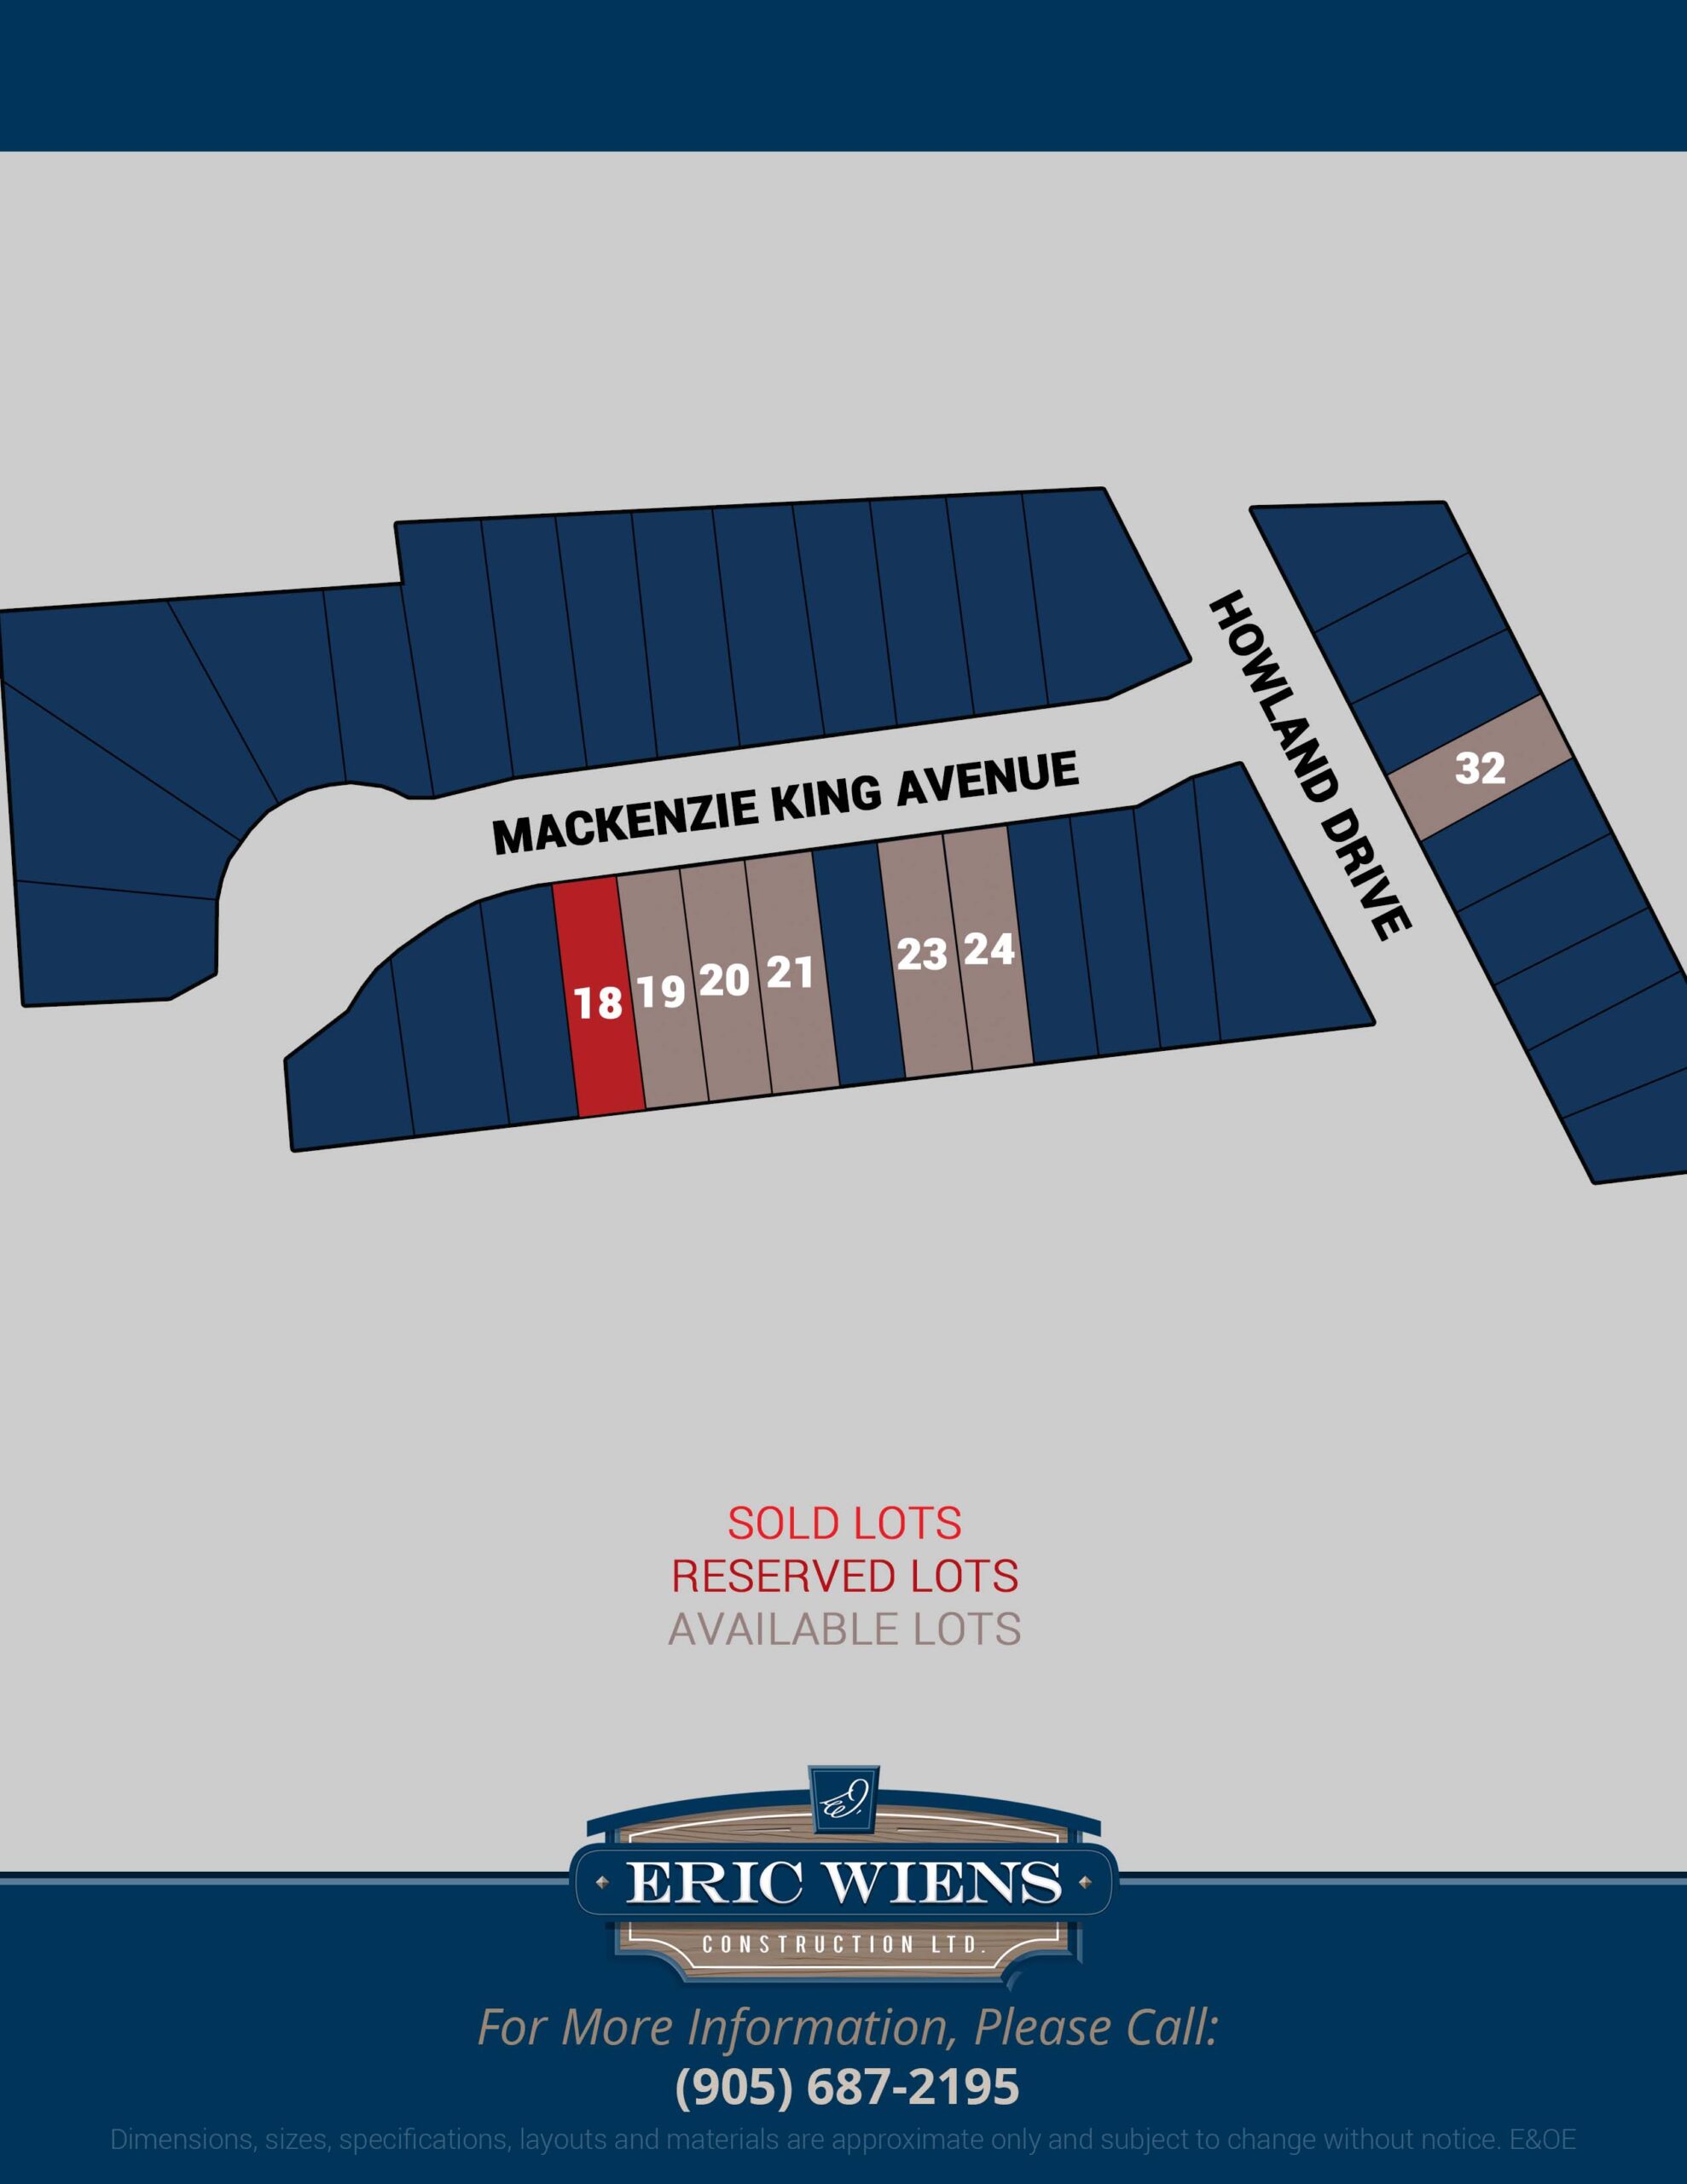 Lot 24 Mackenzie King Avenue Site Plan